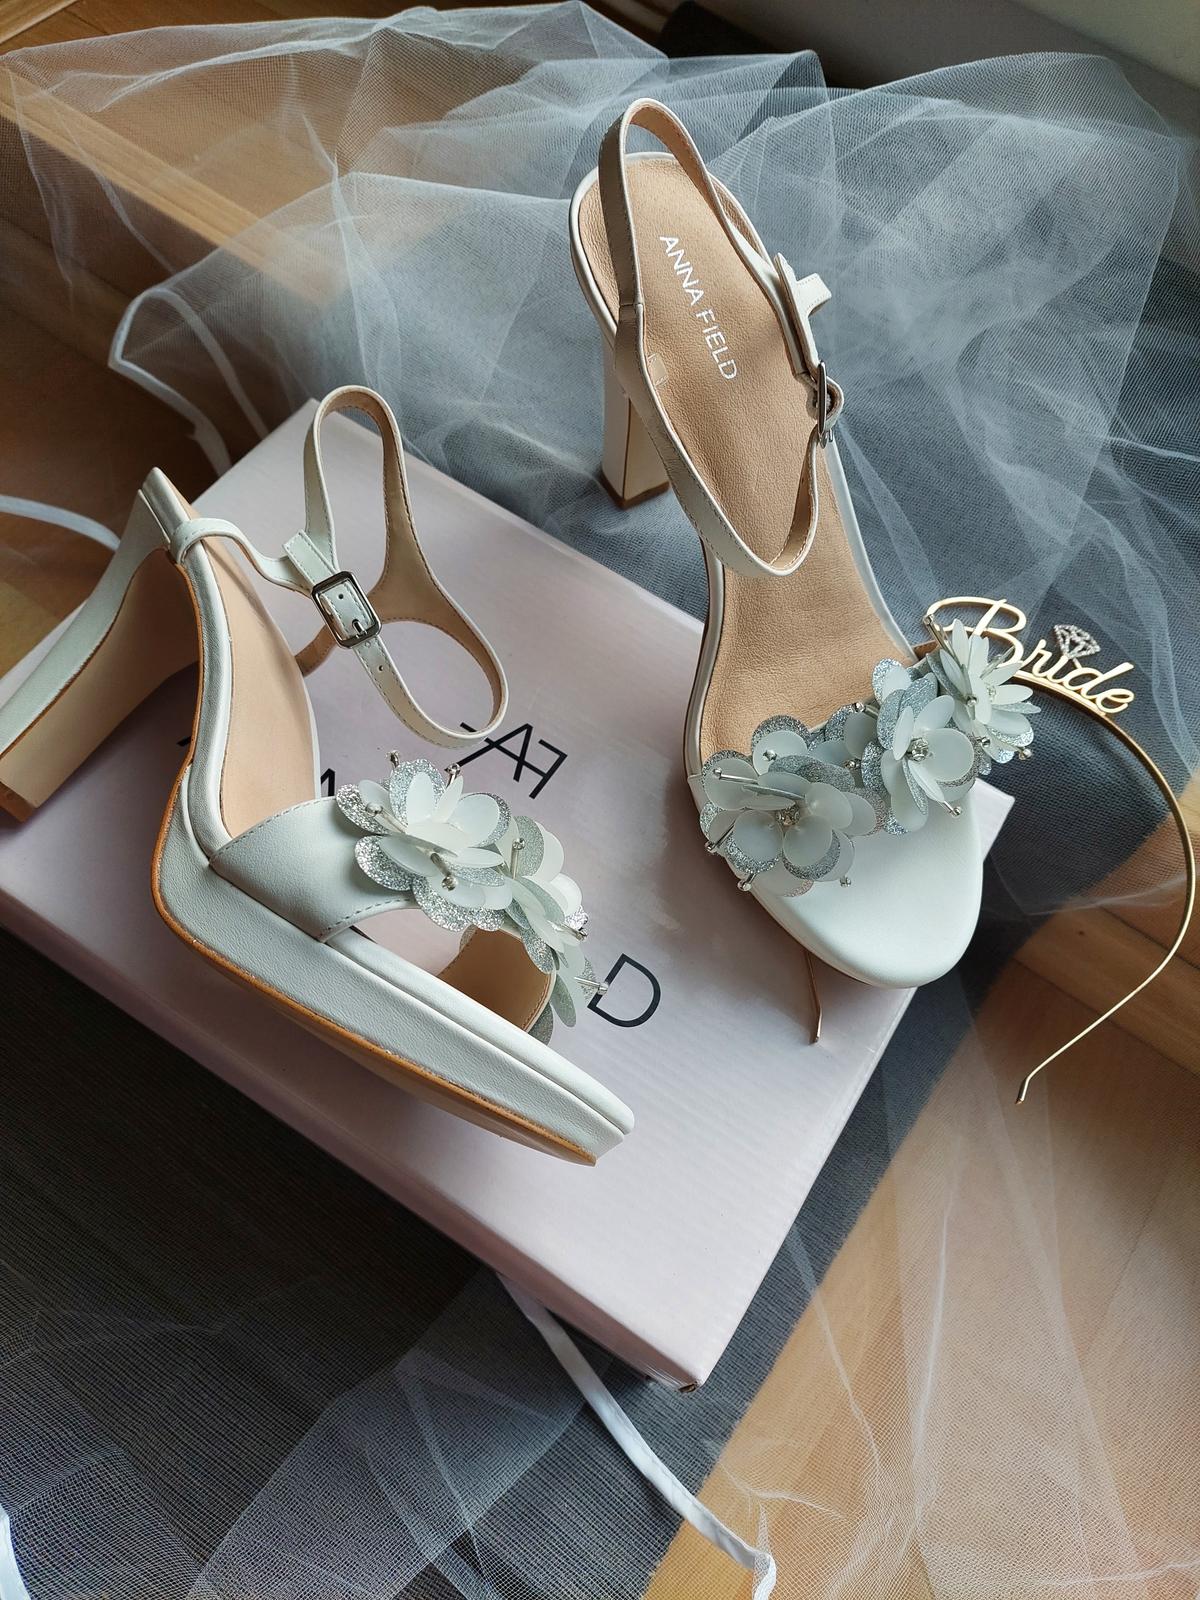 luxusni svatebni boty s krystaly vel.40 - Obrázek č. 1